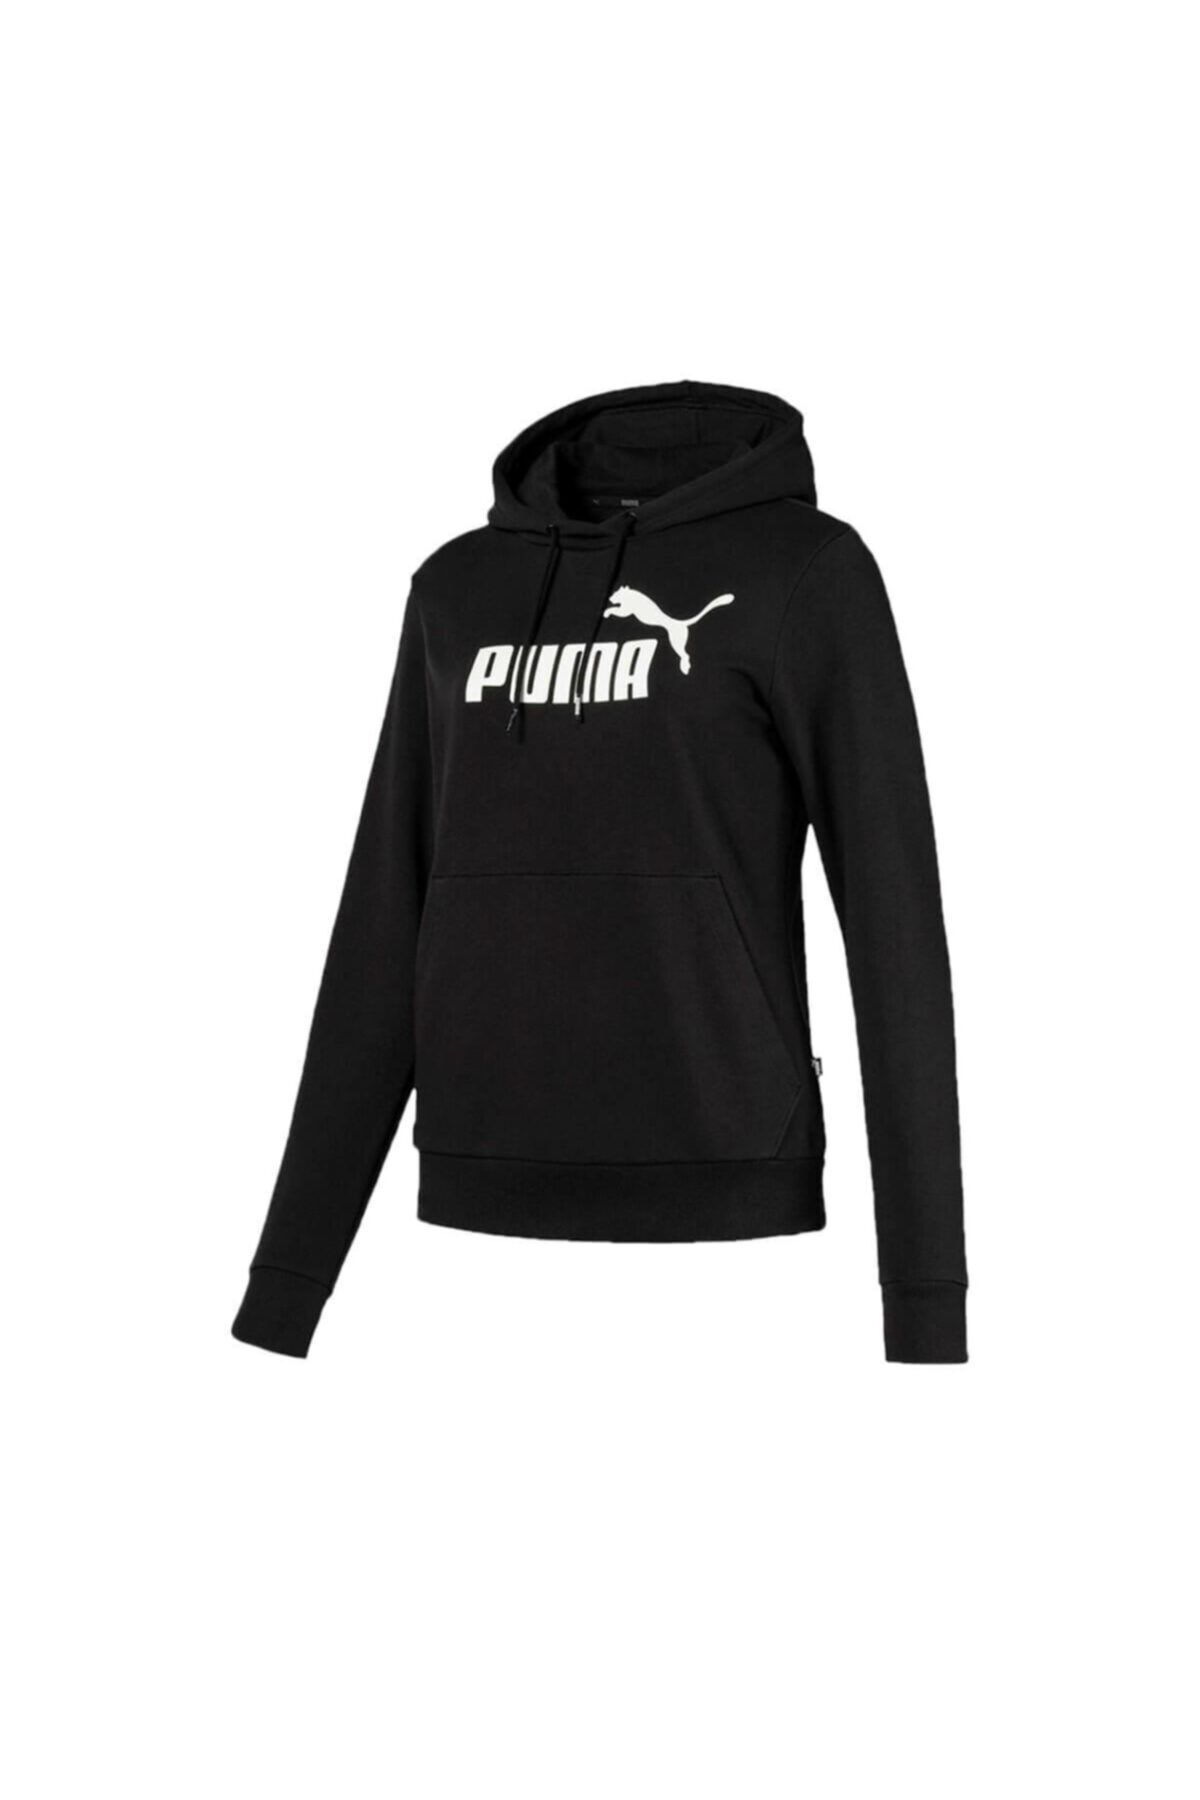 Puma ESS LOGO FL Siyah Kadın Sweatshirt 100480611